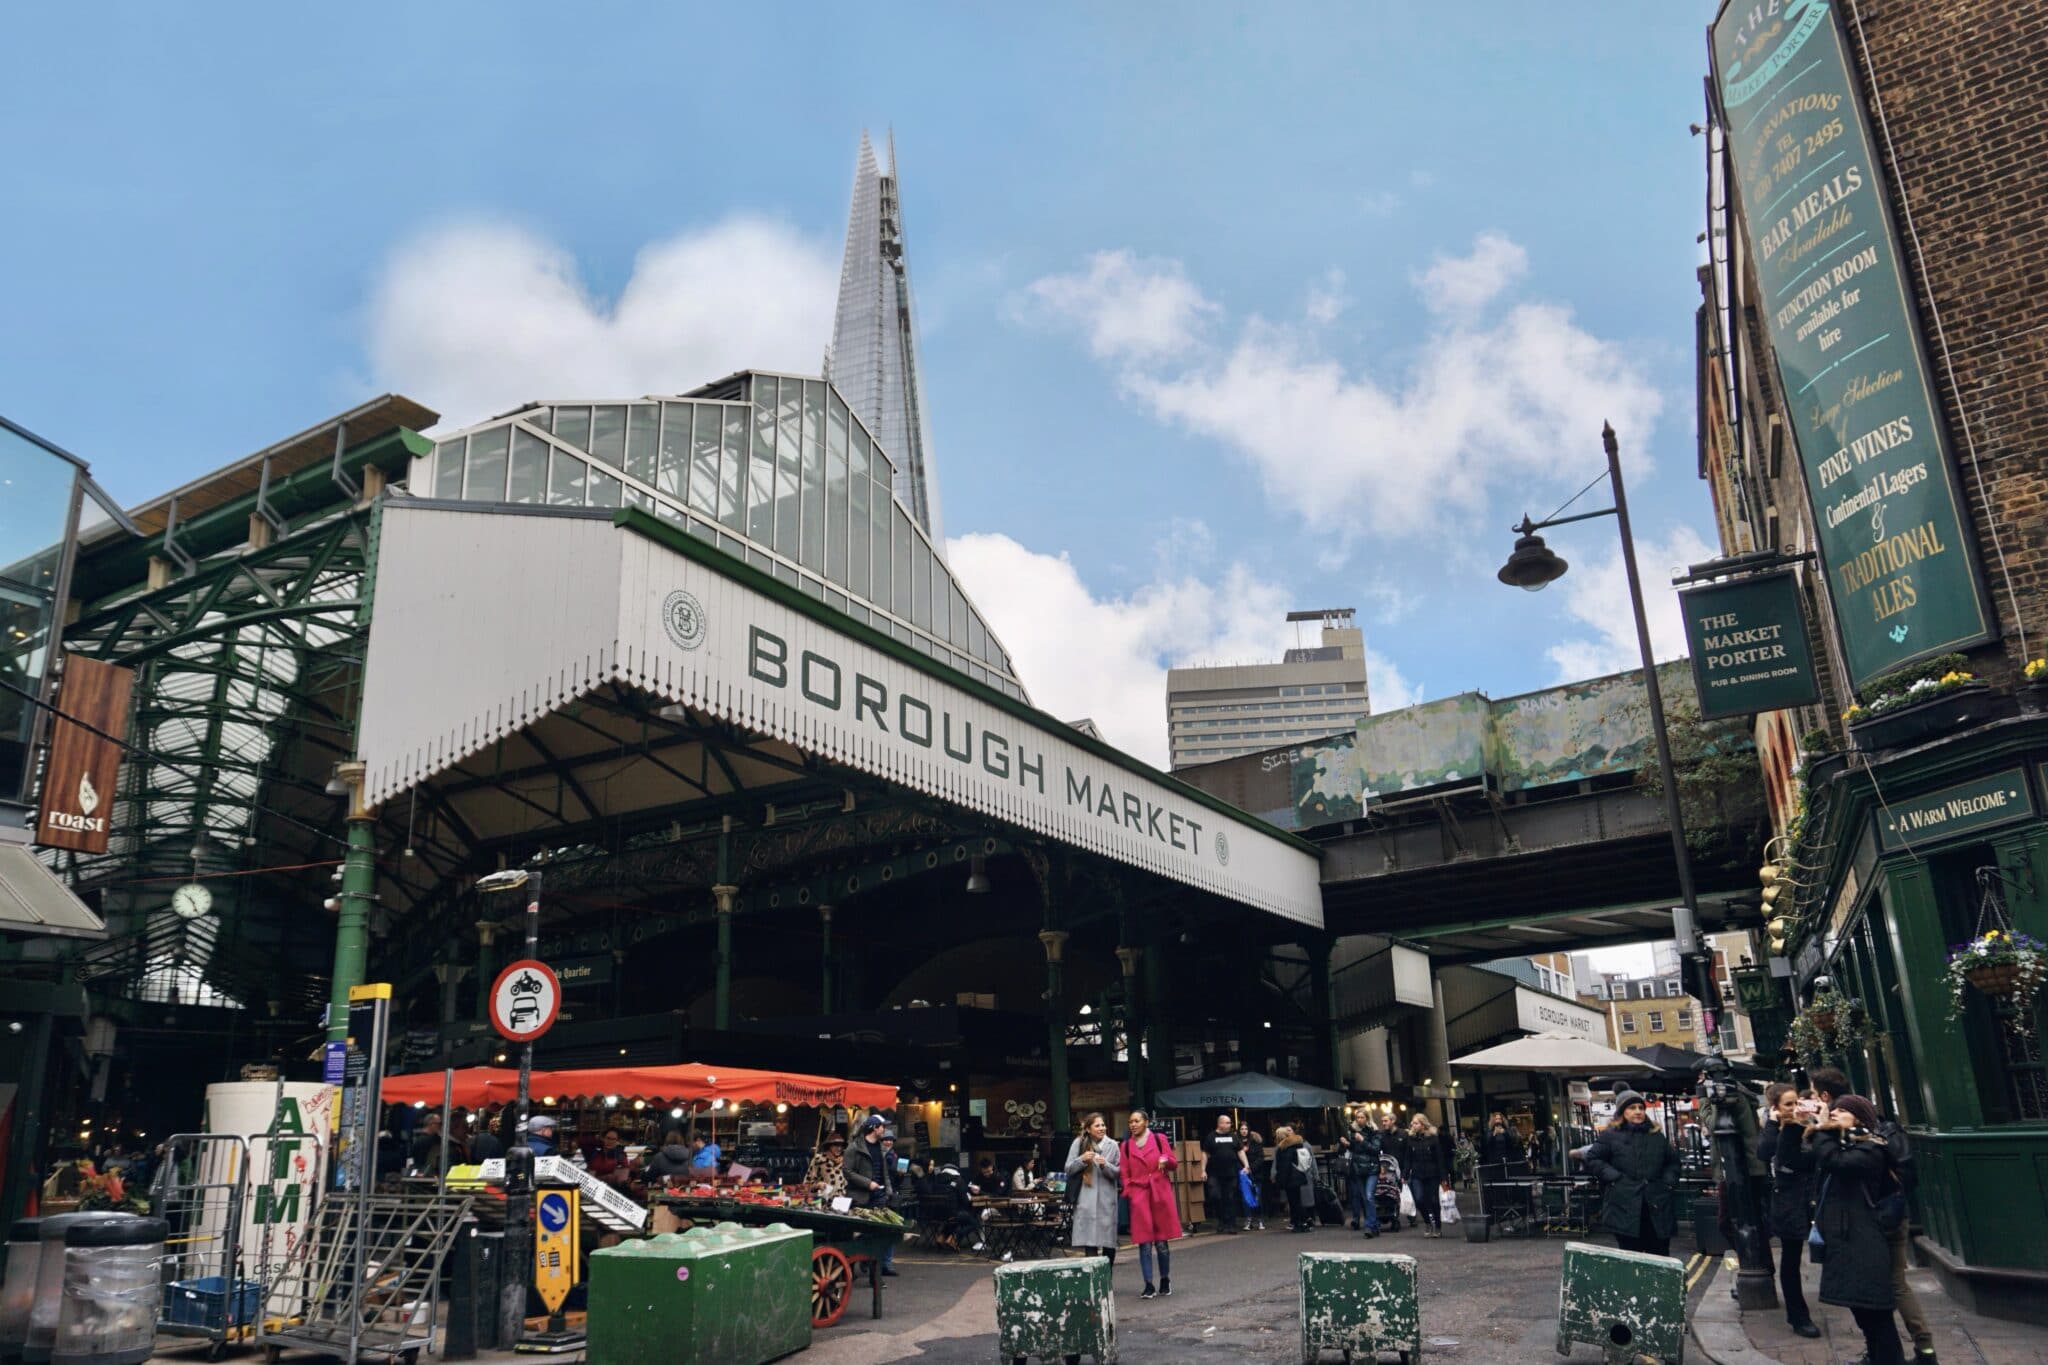 London Bridge Borough Market